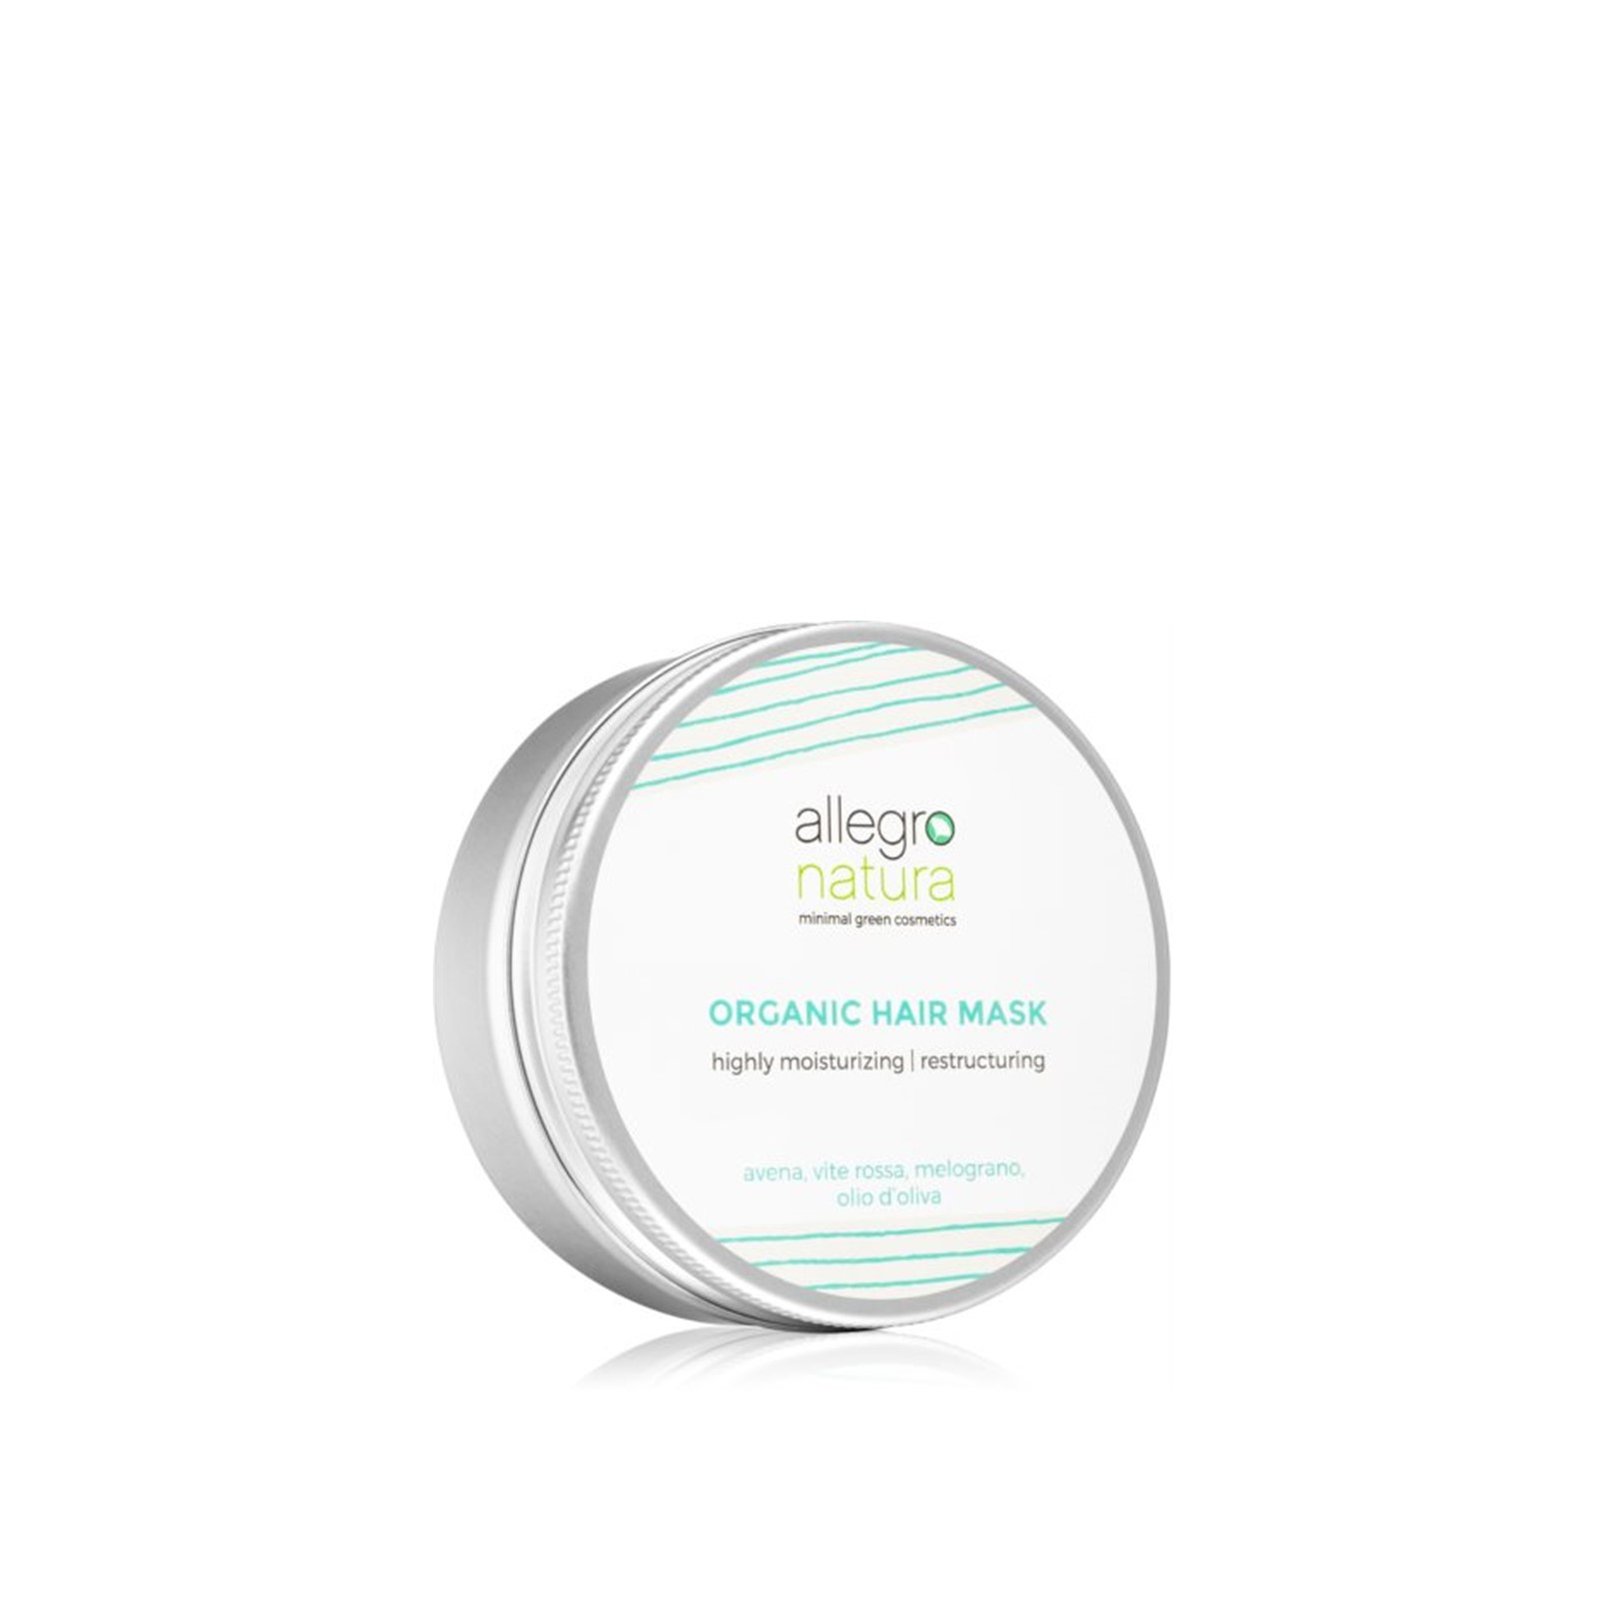 Allegro Natura Organic Hair Mask 200ml (6.76 fl oz)